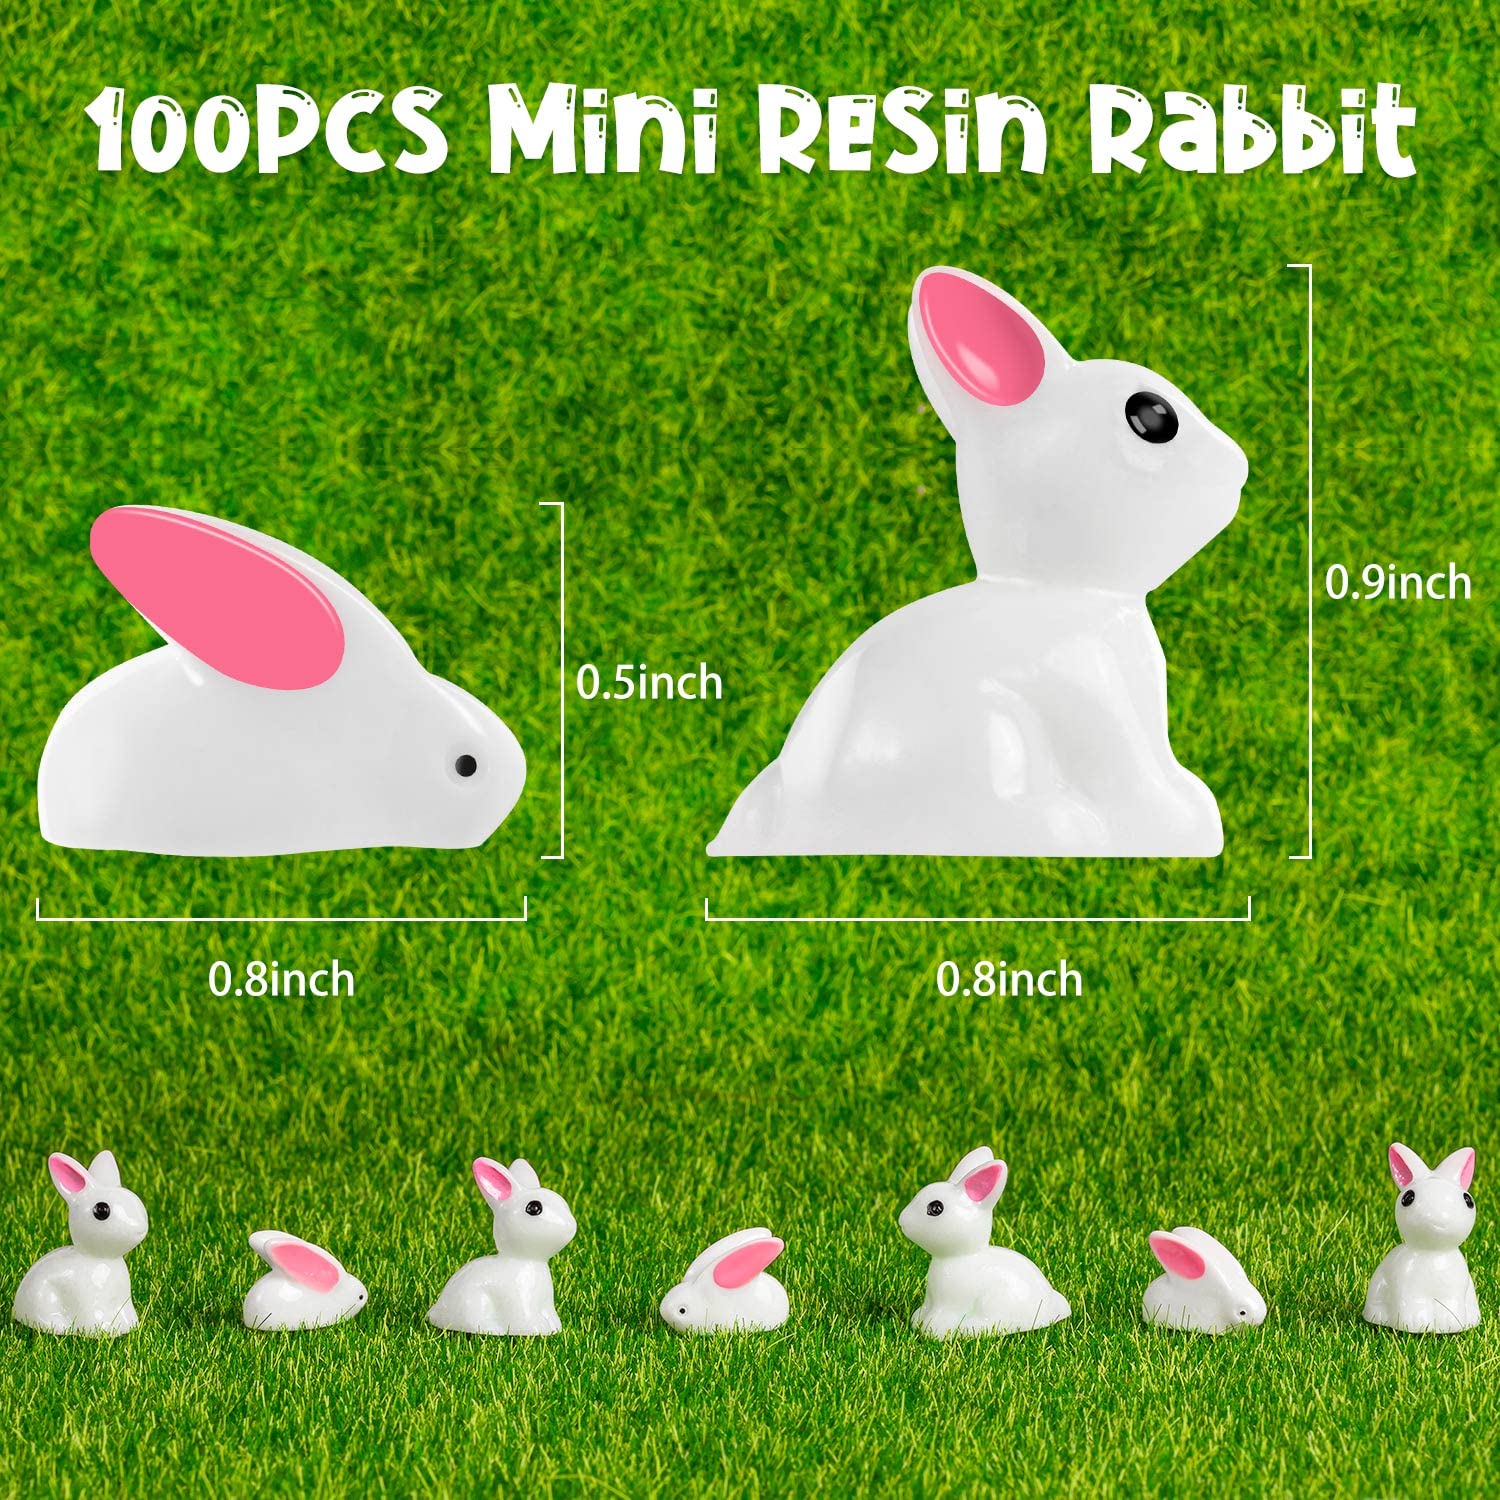 FFNIU Miniature Rabbit Figurines, 100Pcs Mini Resin Bunny Animals Toy, Miniature Rabbit for Landscape Ornaments Miniature Garden Decor Potted Plant,Cake Topper Decoration